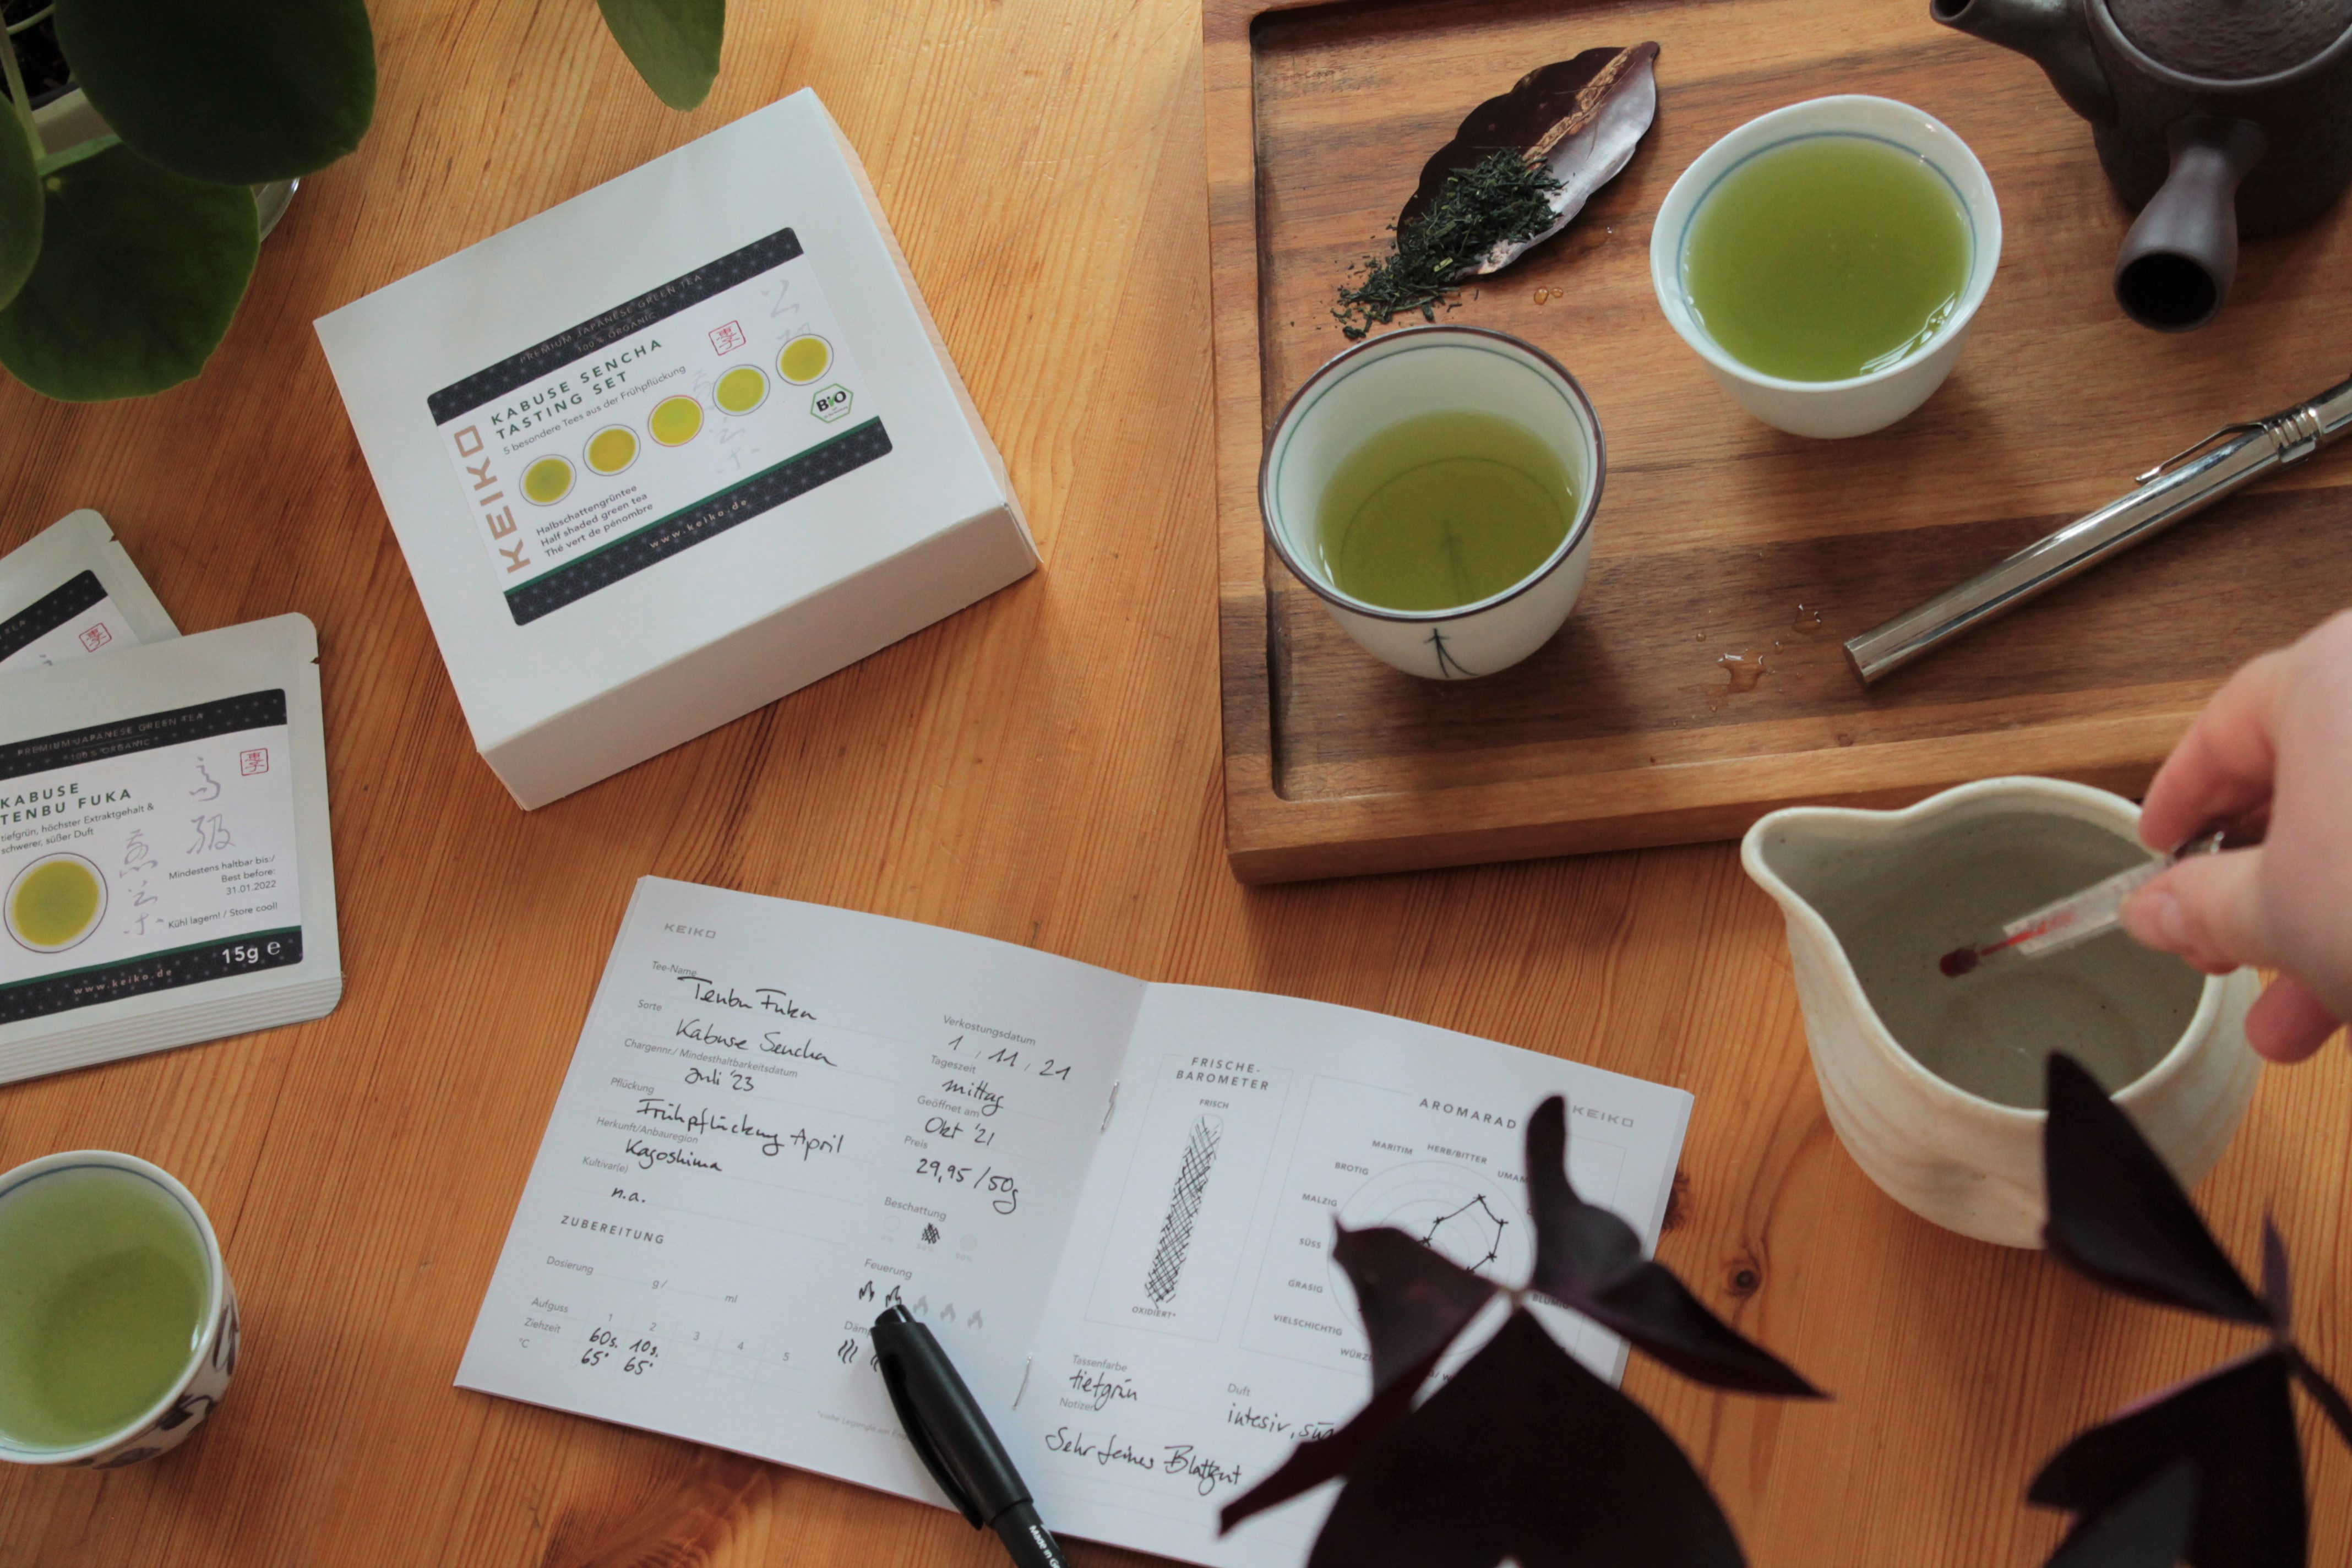 Kabuse Sencha Tasting Set - Organic Japanese Green Tea